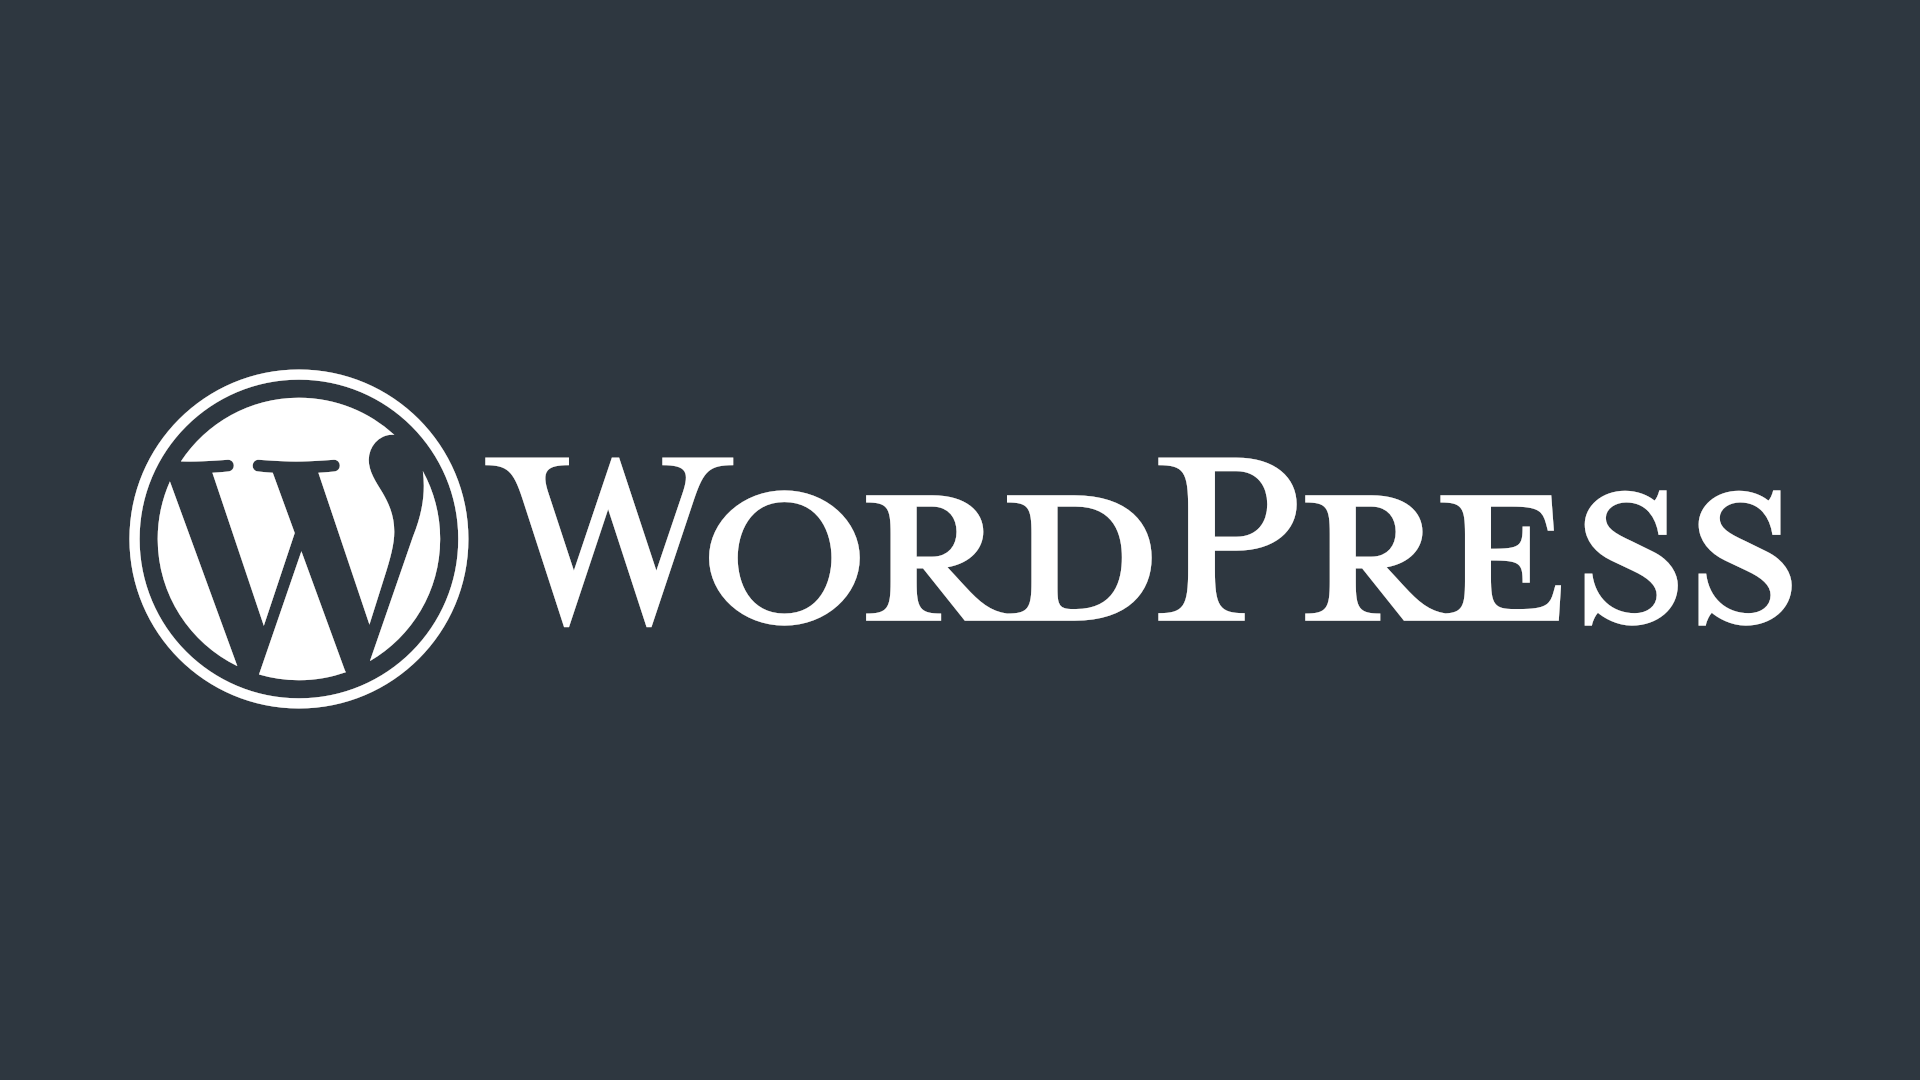 WordPress 6.2 Schedule • 2022 in Core • Block Developer Year in Review • New Incident Response Team